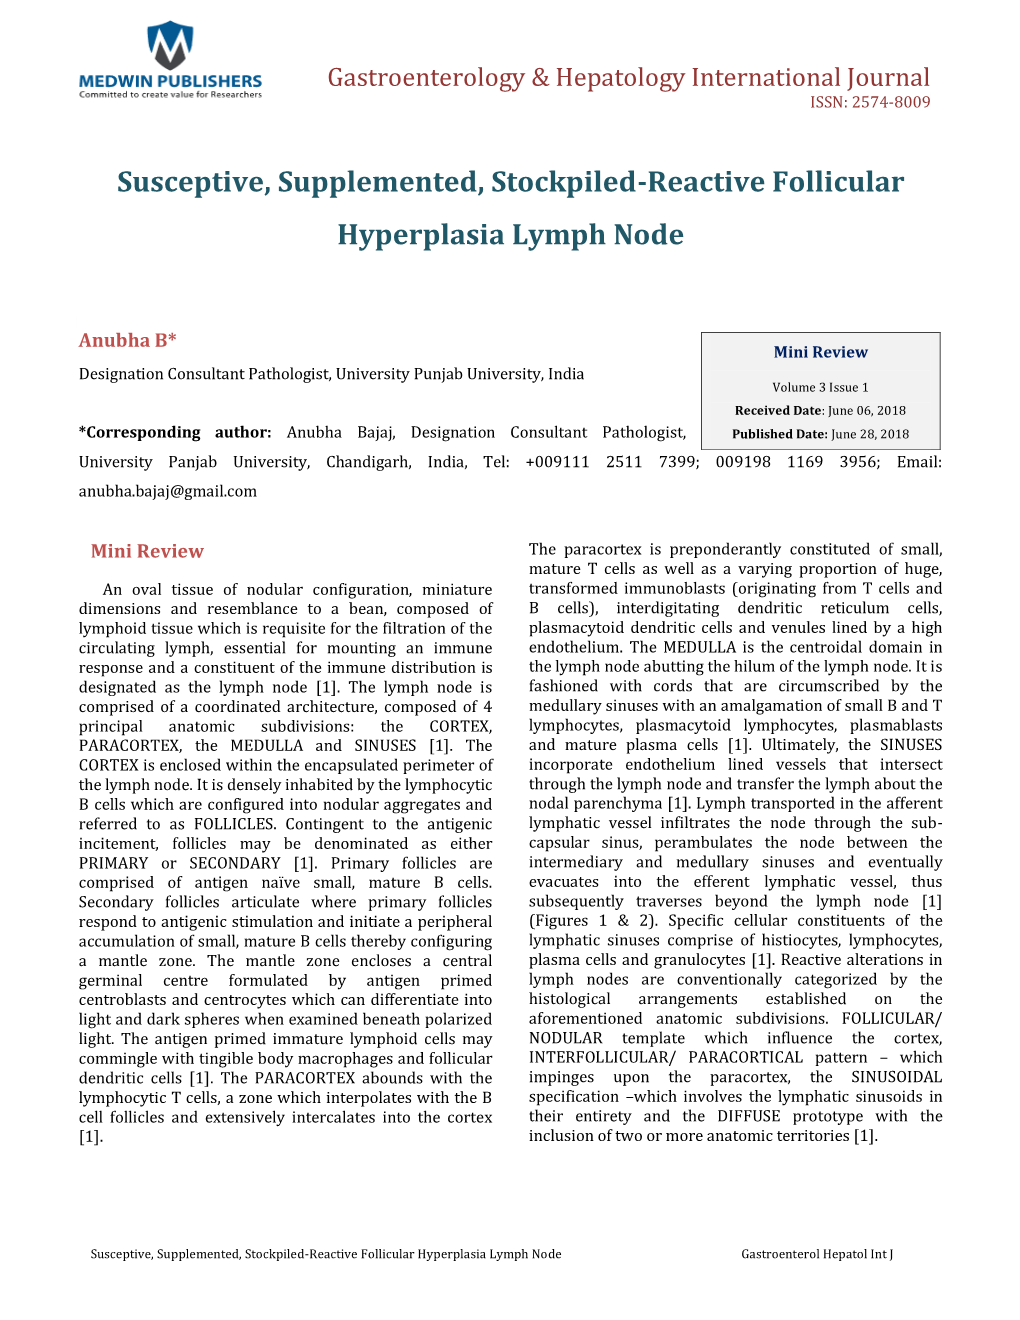 Susceptive, Supplemented, Stockpiled-Reactive Follicular Hyperplasia Lymph Node. Gastroenterol Hepatol Int J 2018, 3(1): 000136